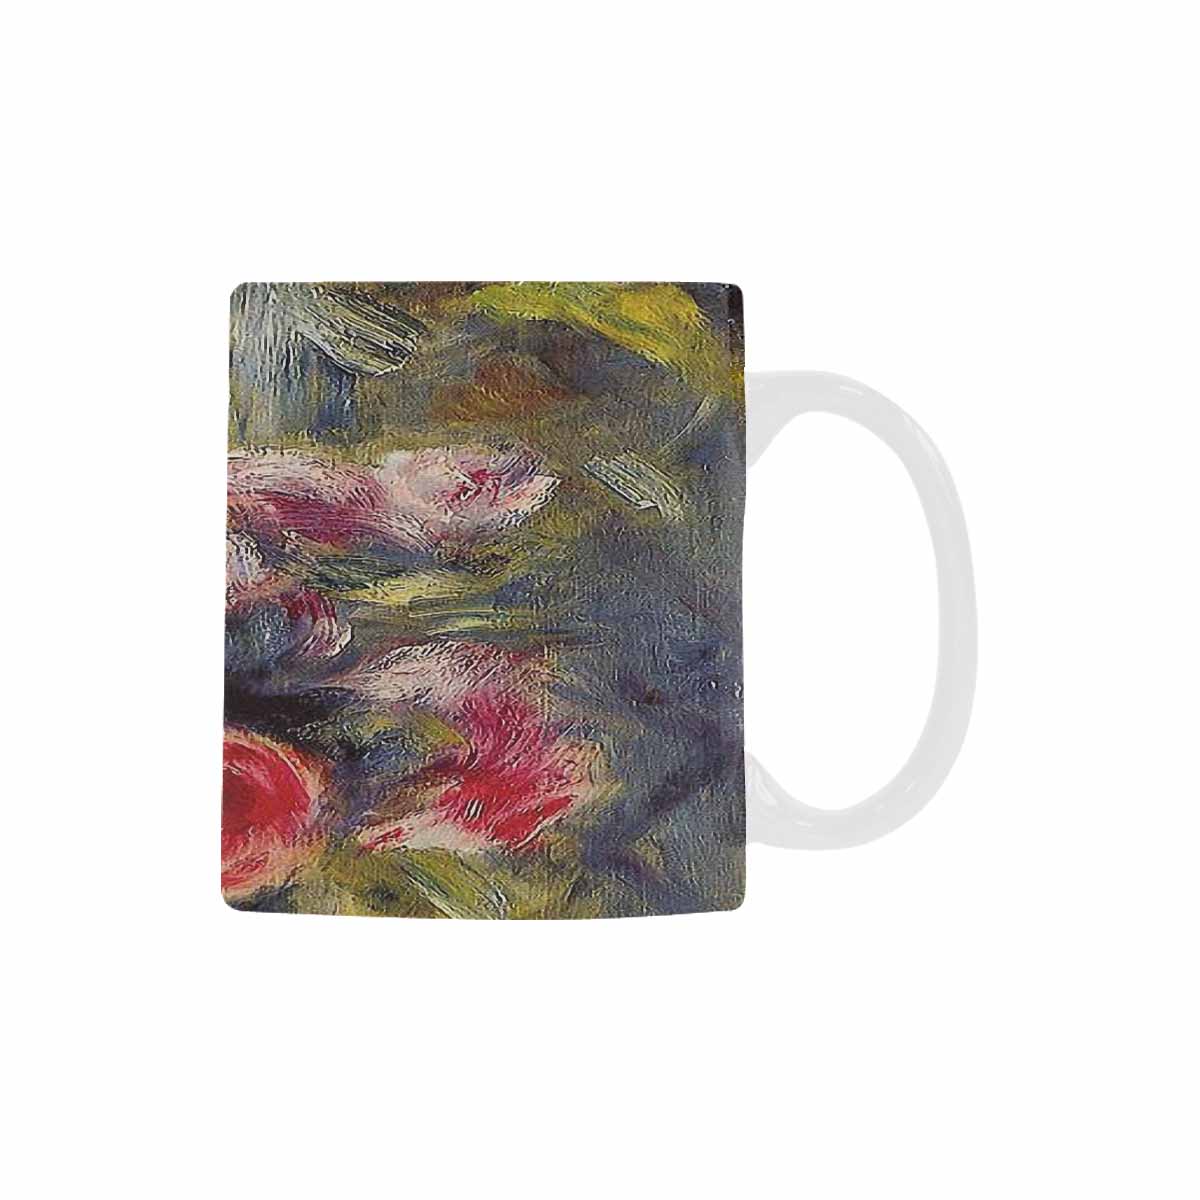 Vintage floral coffee mug or tea cup, Design 26